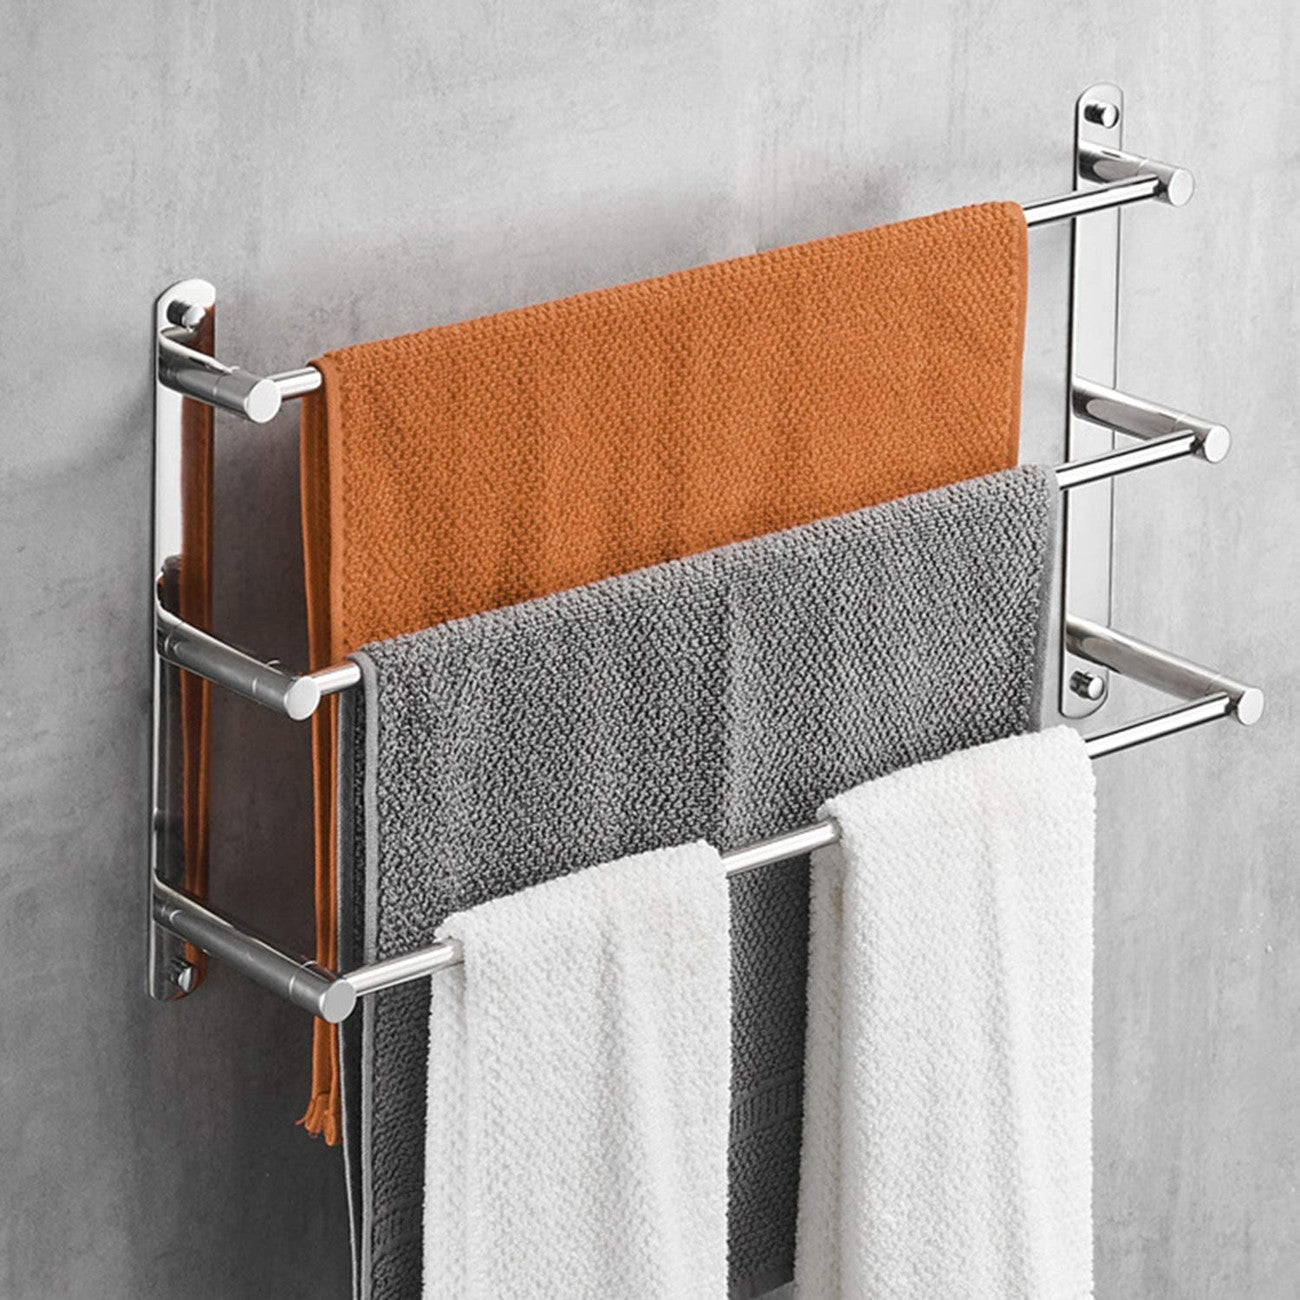 Multi-layer Towel Bar, Towel Rack For Bathroom, Wall Mounted Towel